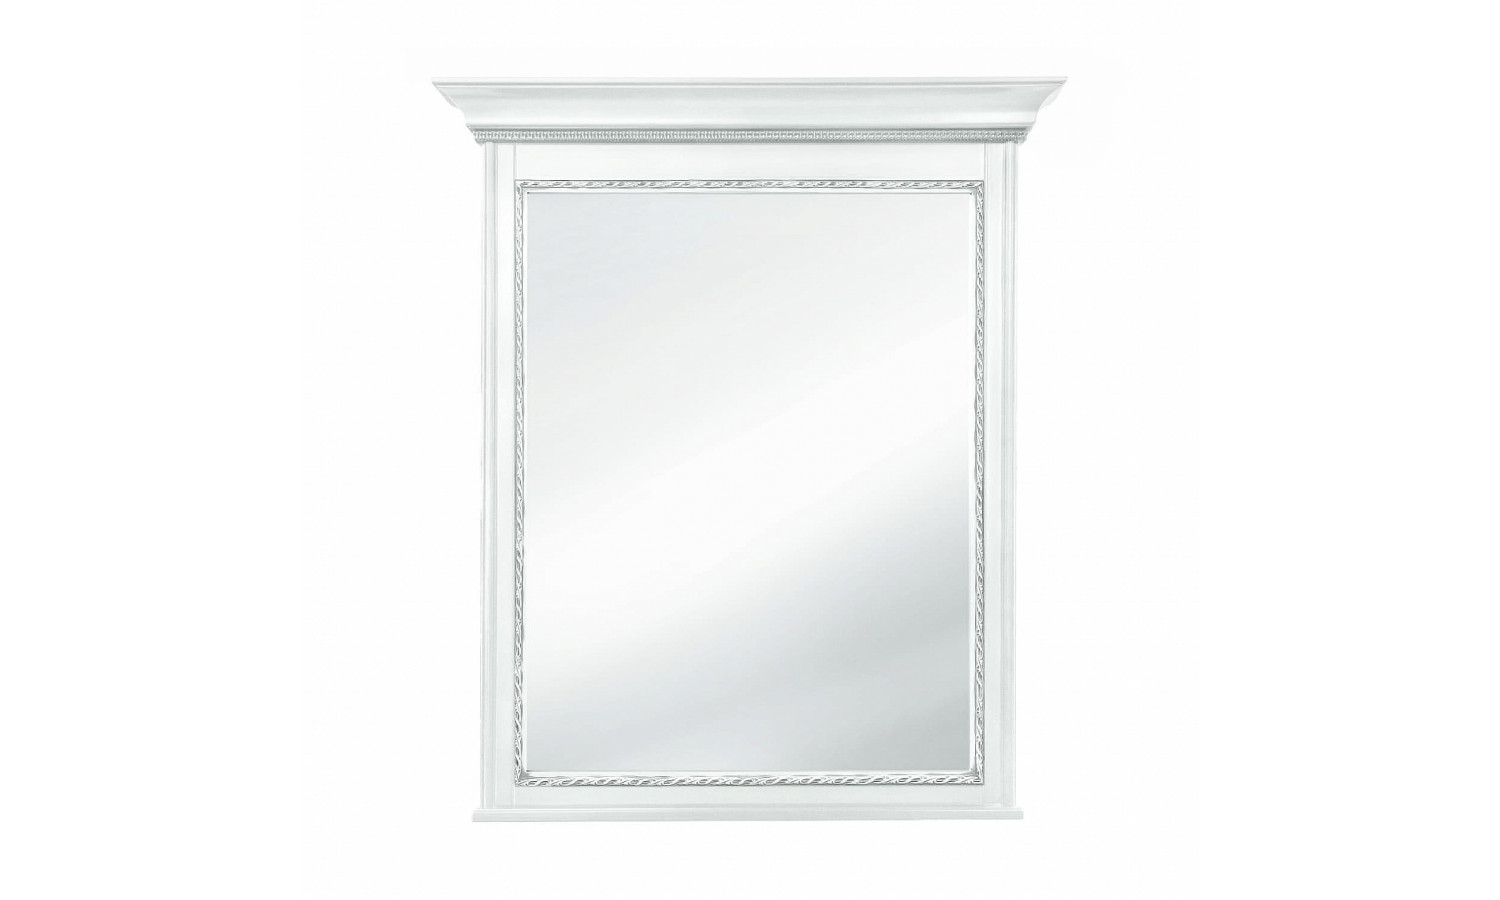 Зеркало Палермо Белый/Патина Серебро со структурой дерева